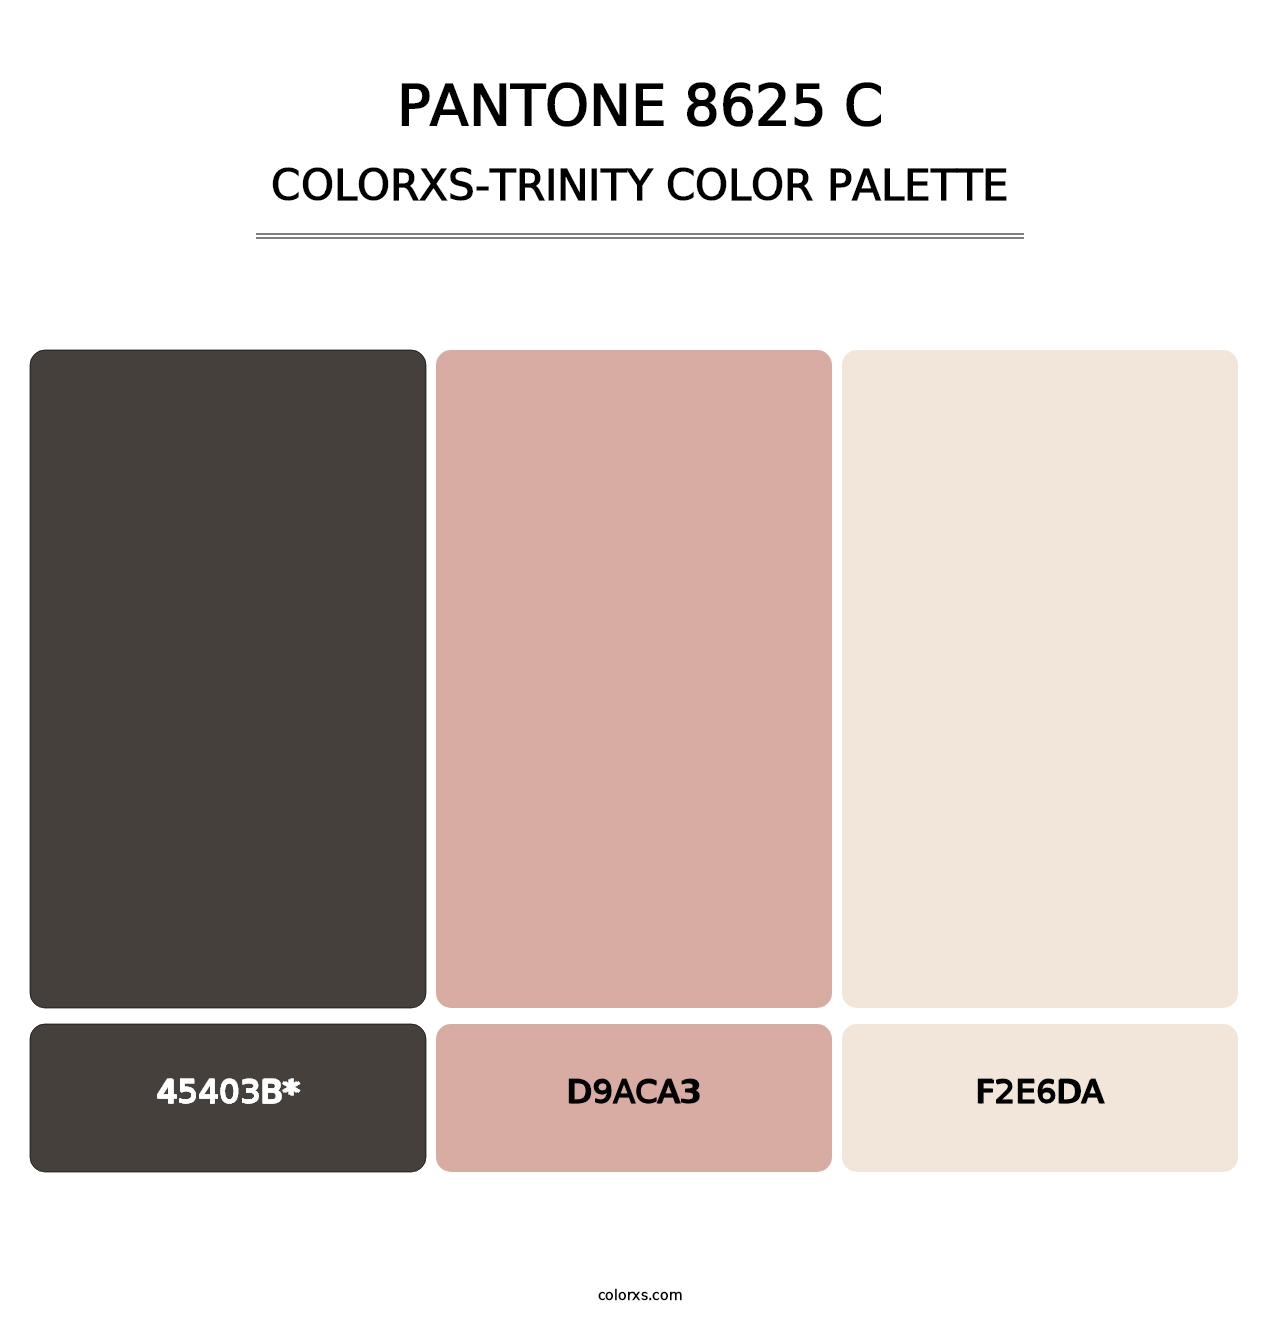 PANTONE 8625 C - Colorxs Trinity Palette